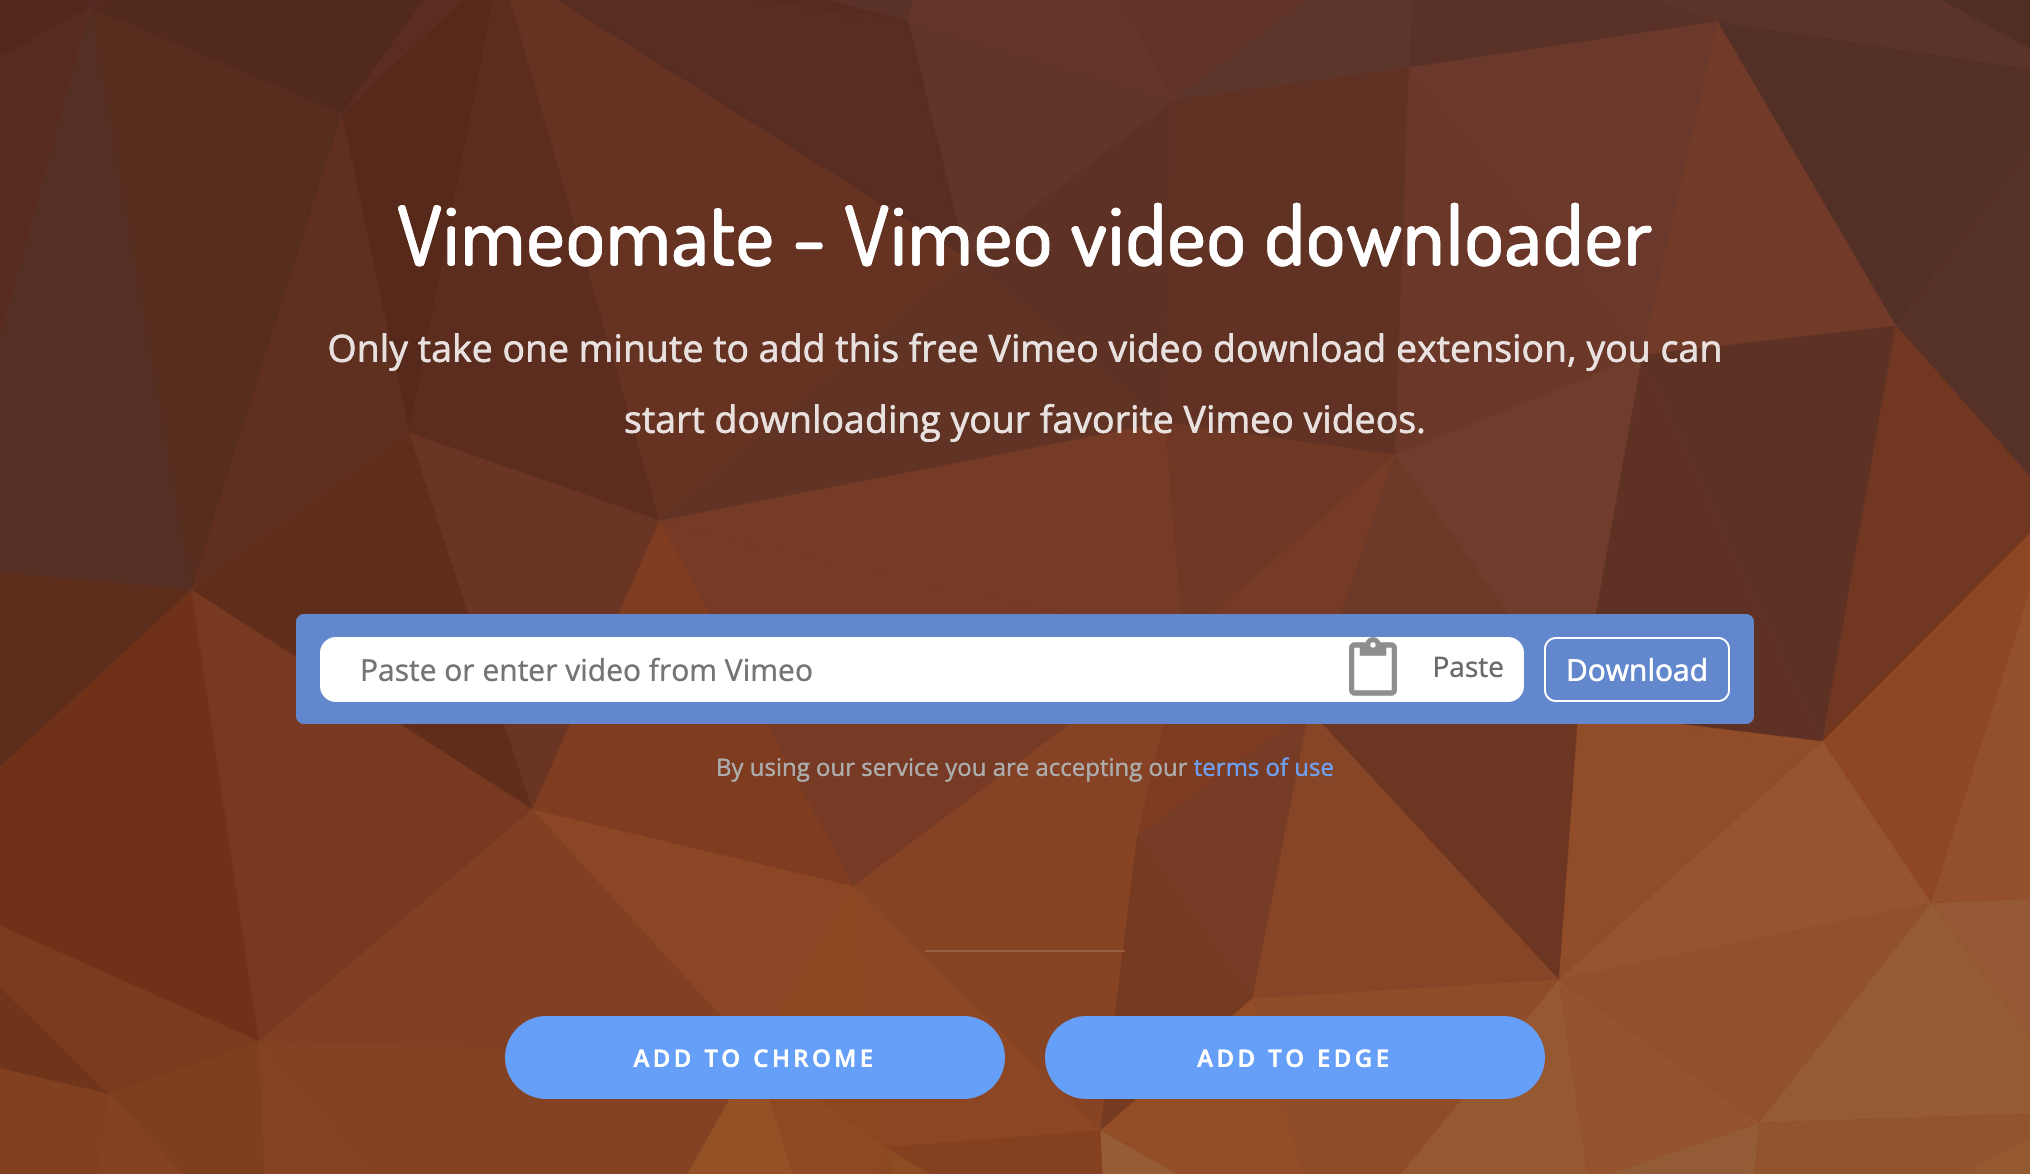 Vimeomate - Vimeo video downloader